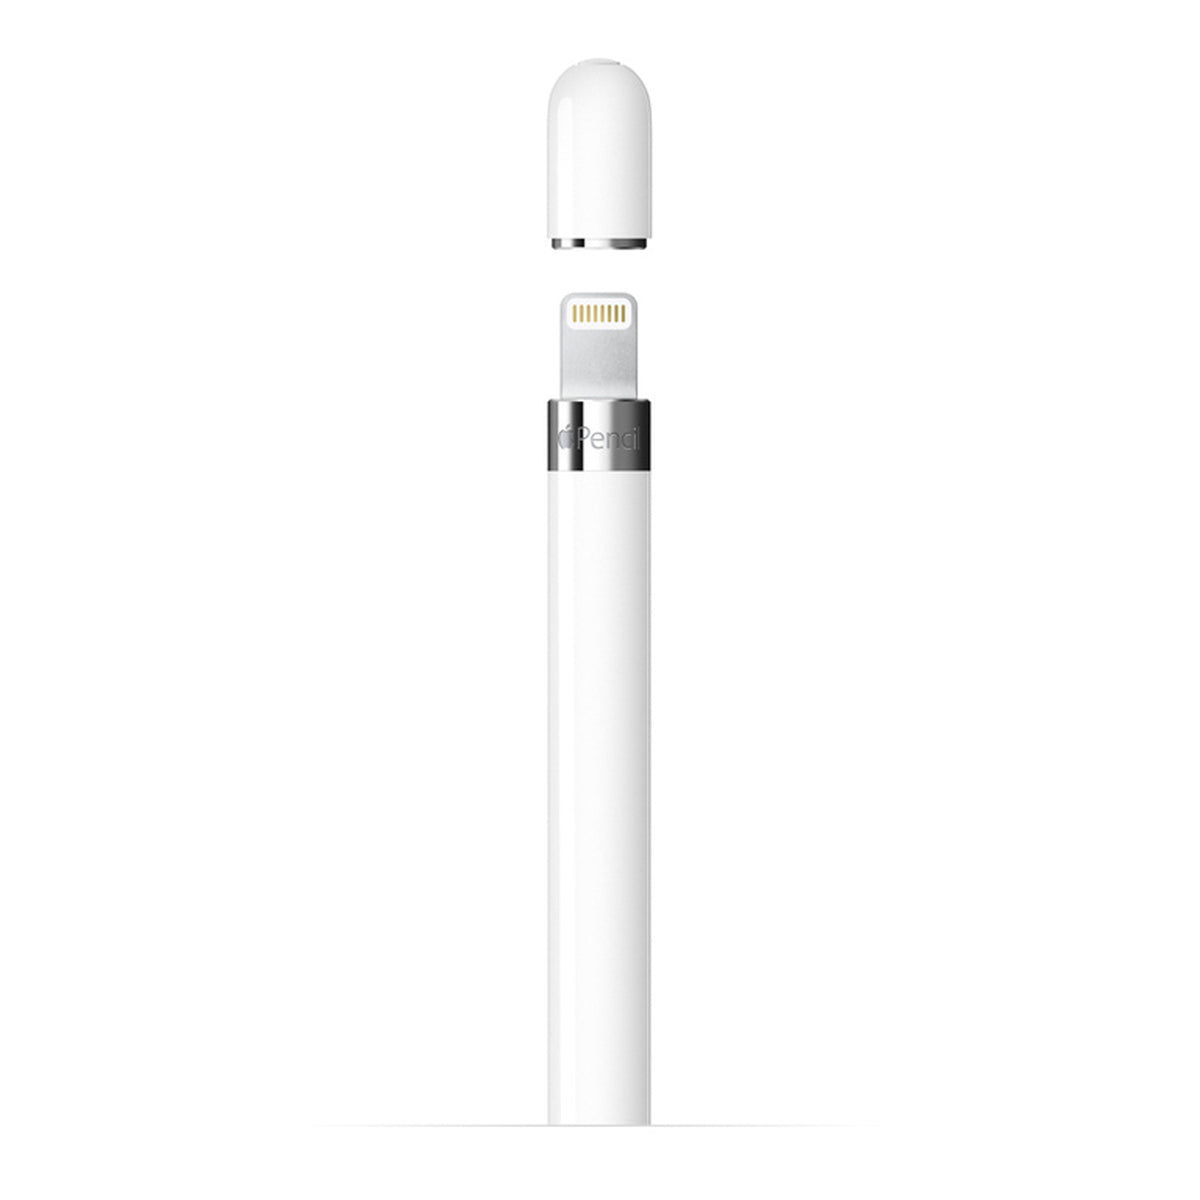 Apple Pencil White | Best iPad Accessories | Halabh